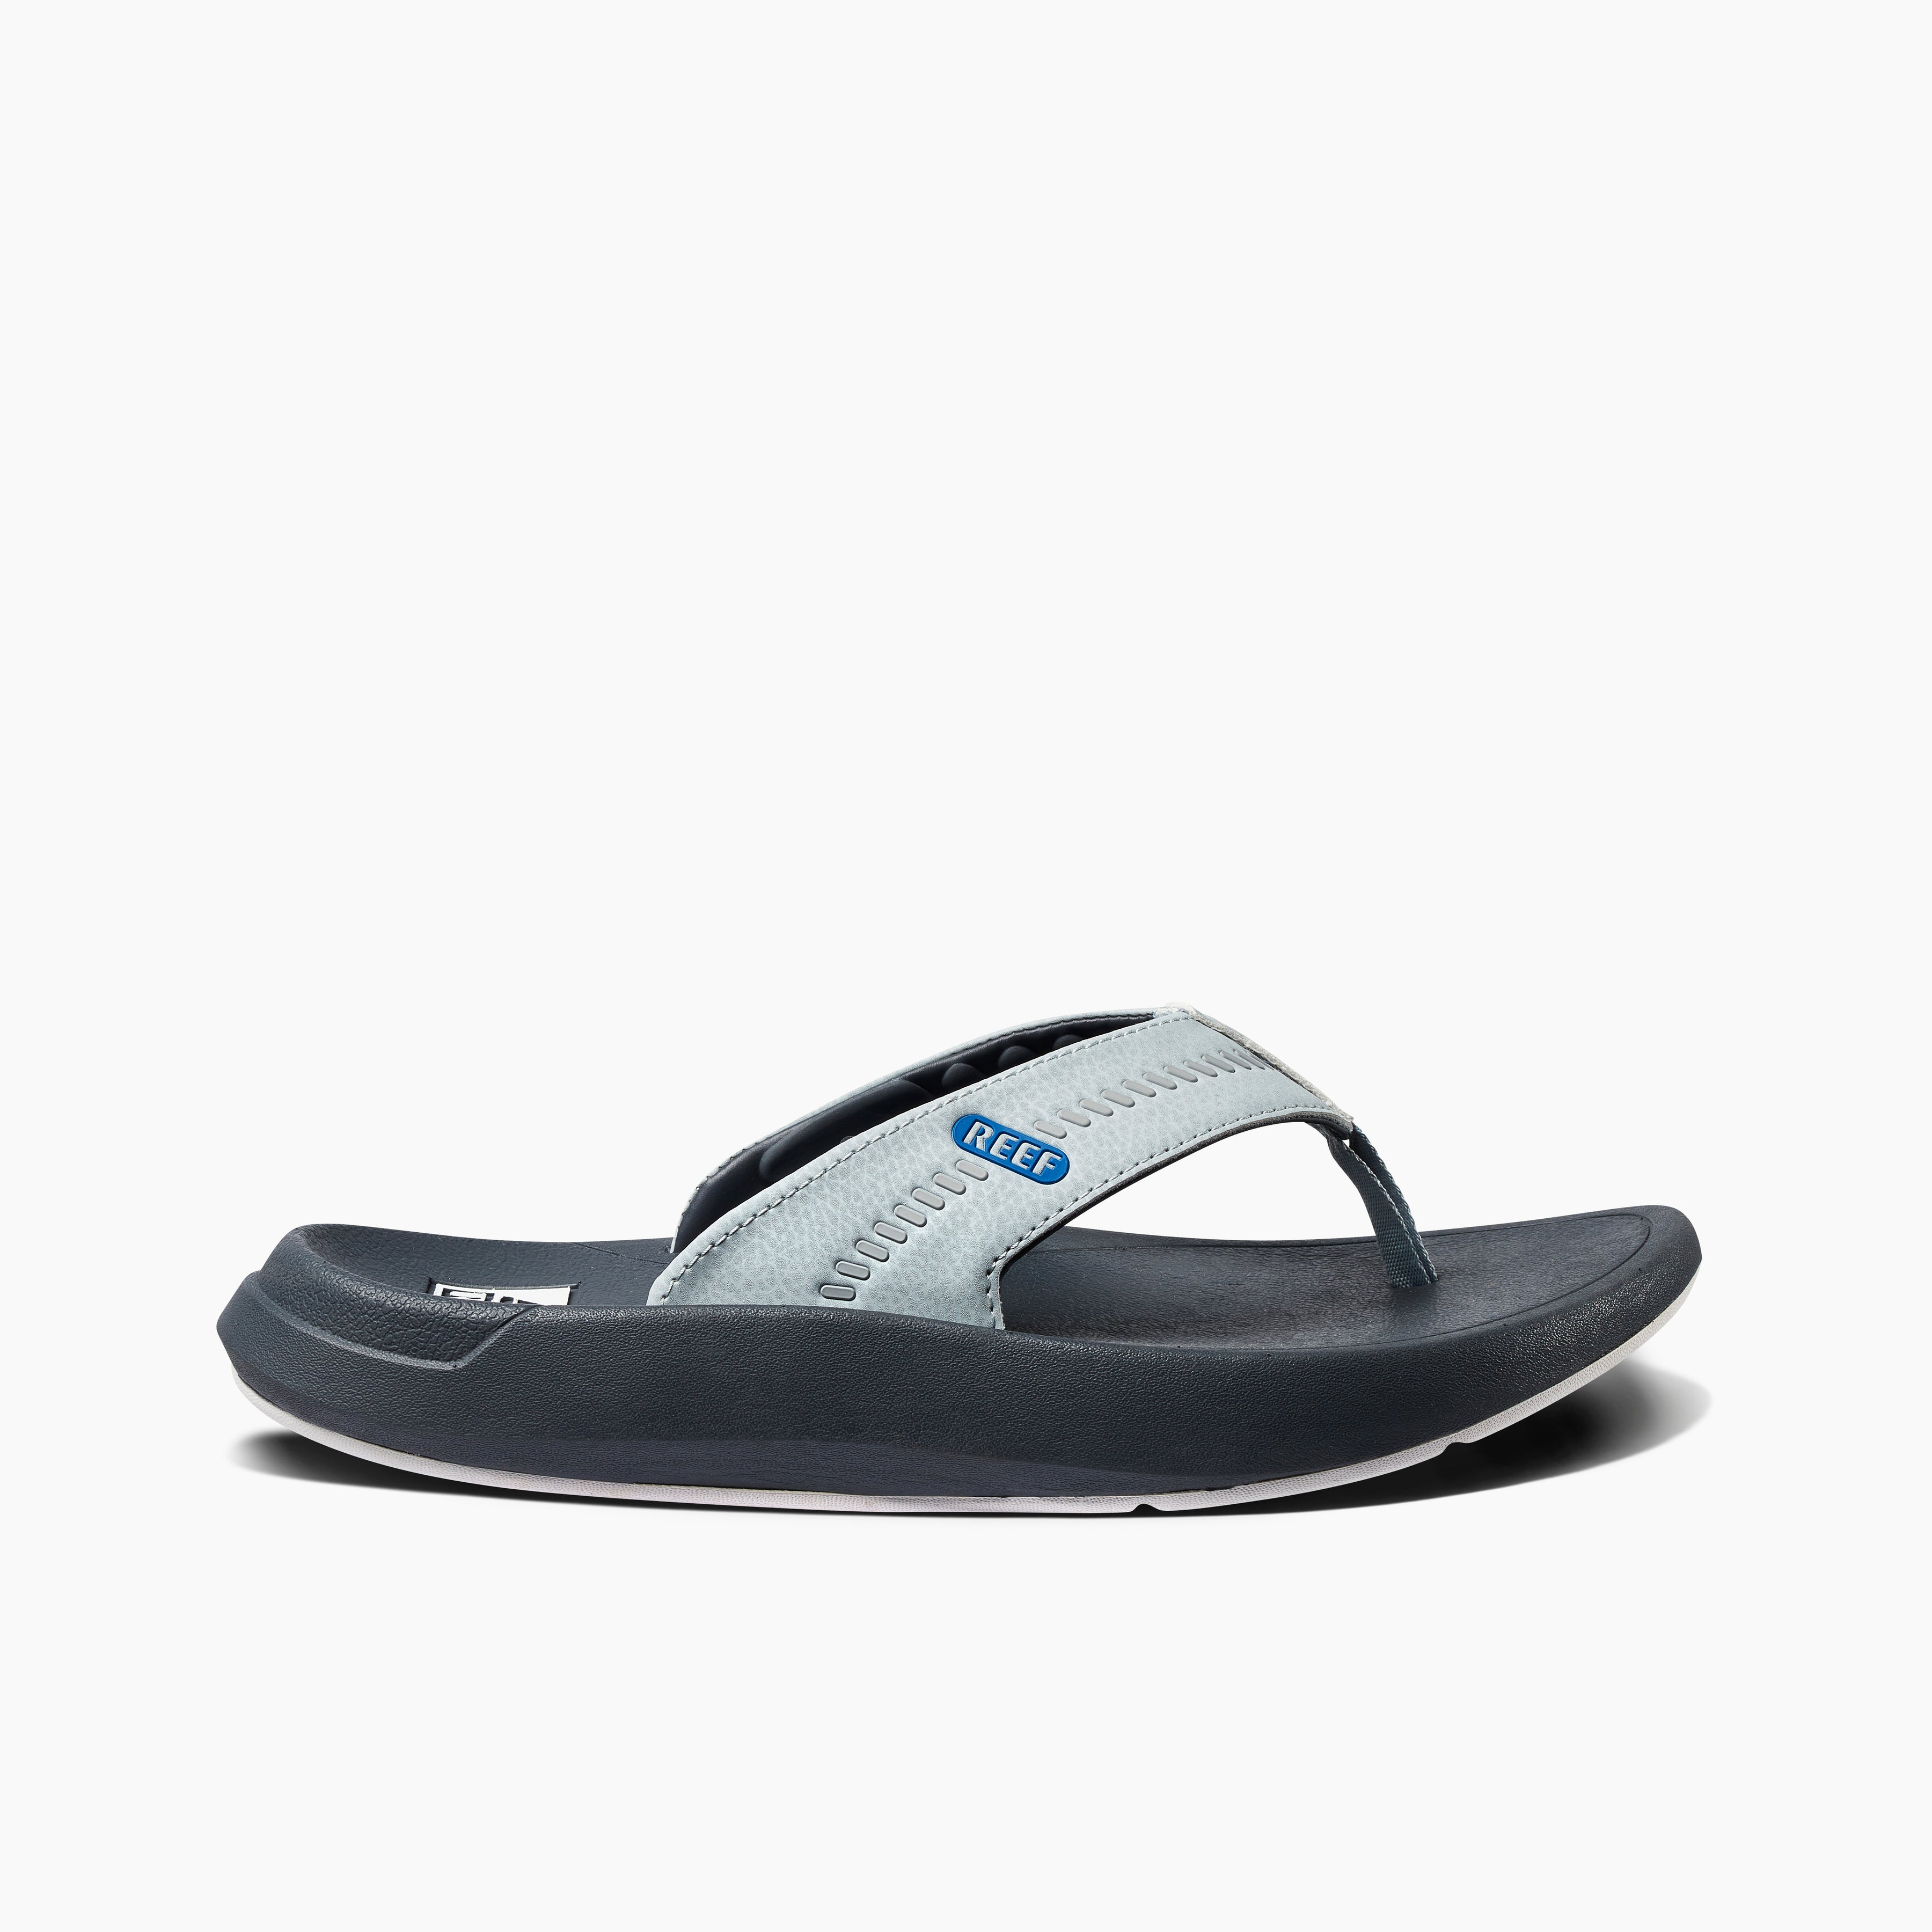 Men's Sandals SWELLsole Cruiser in Grey/Light Grey/Blue | REEF®